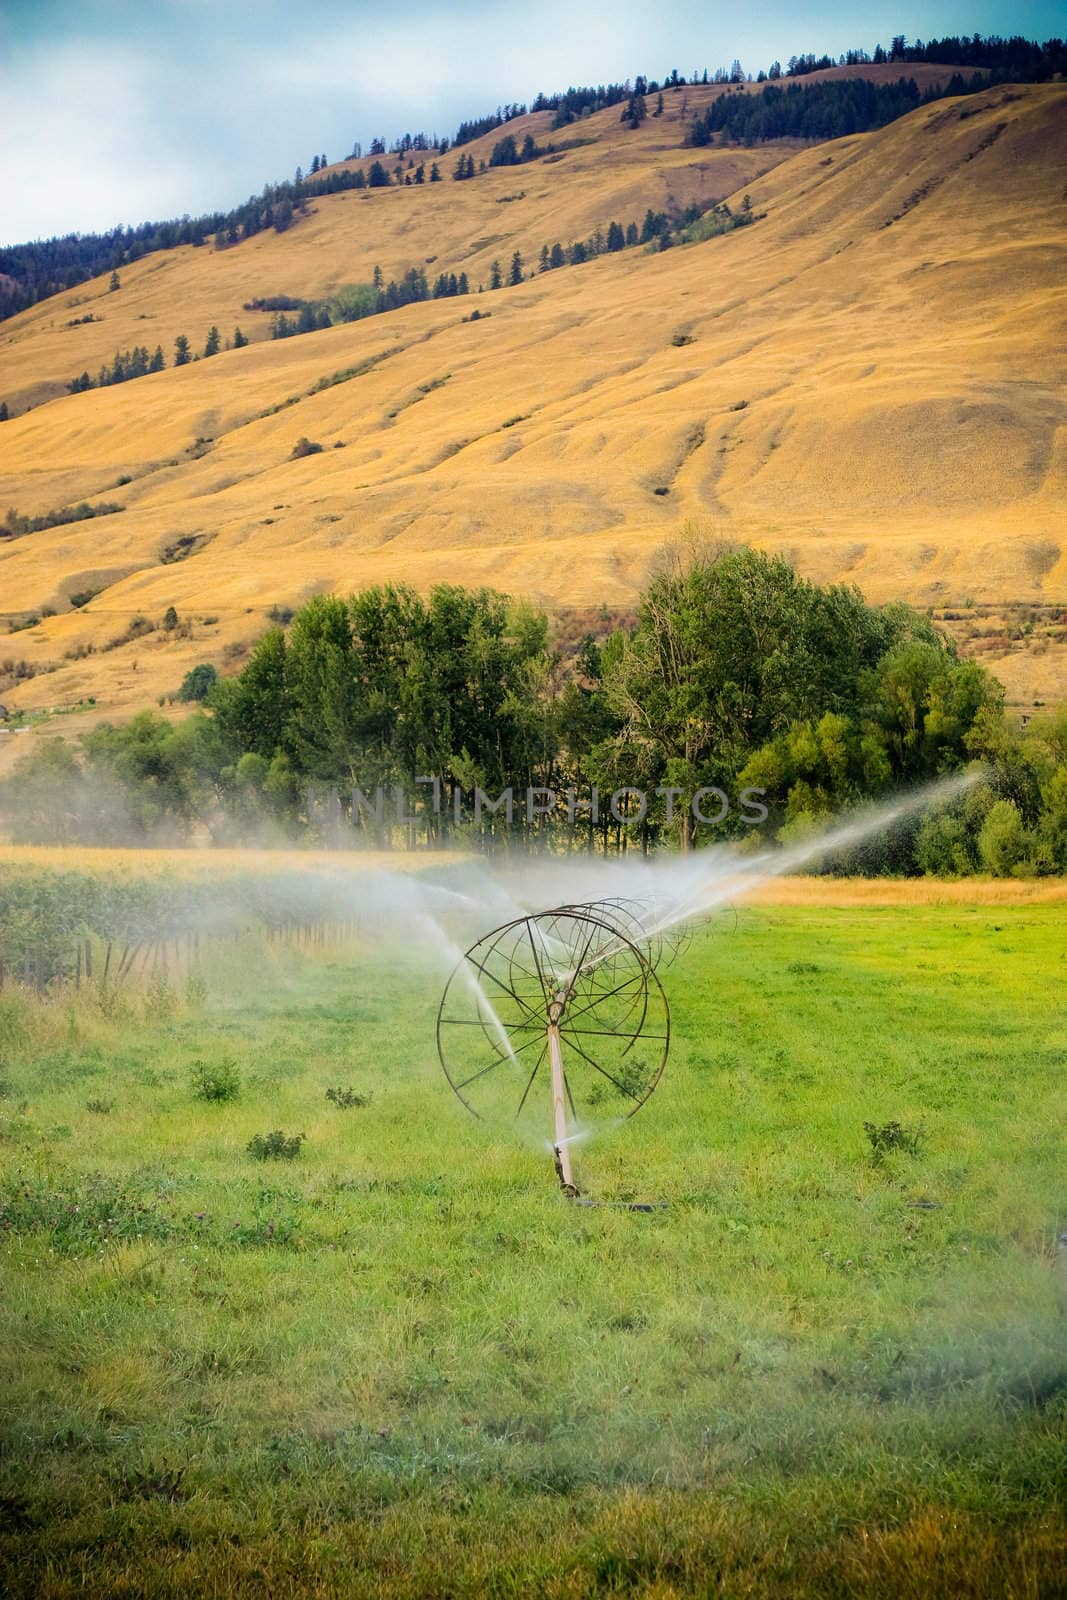 sprinklers fountain on the farm field